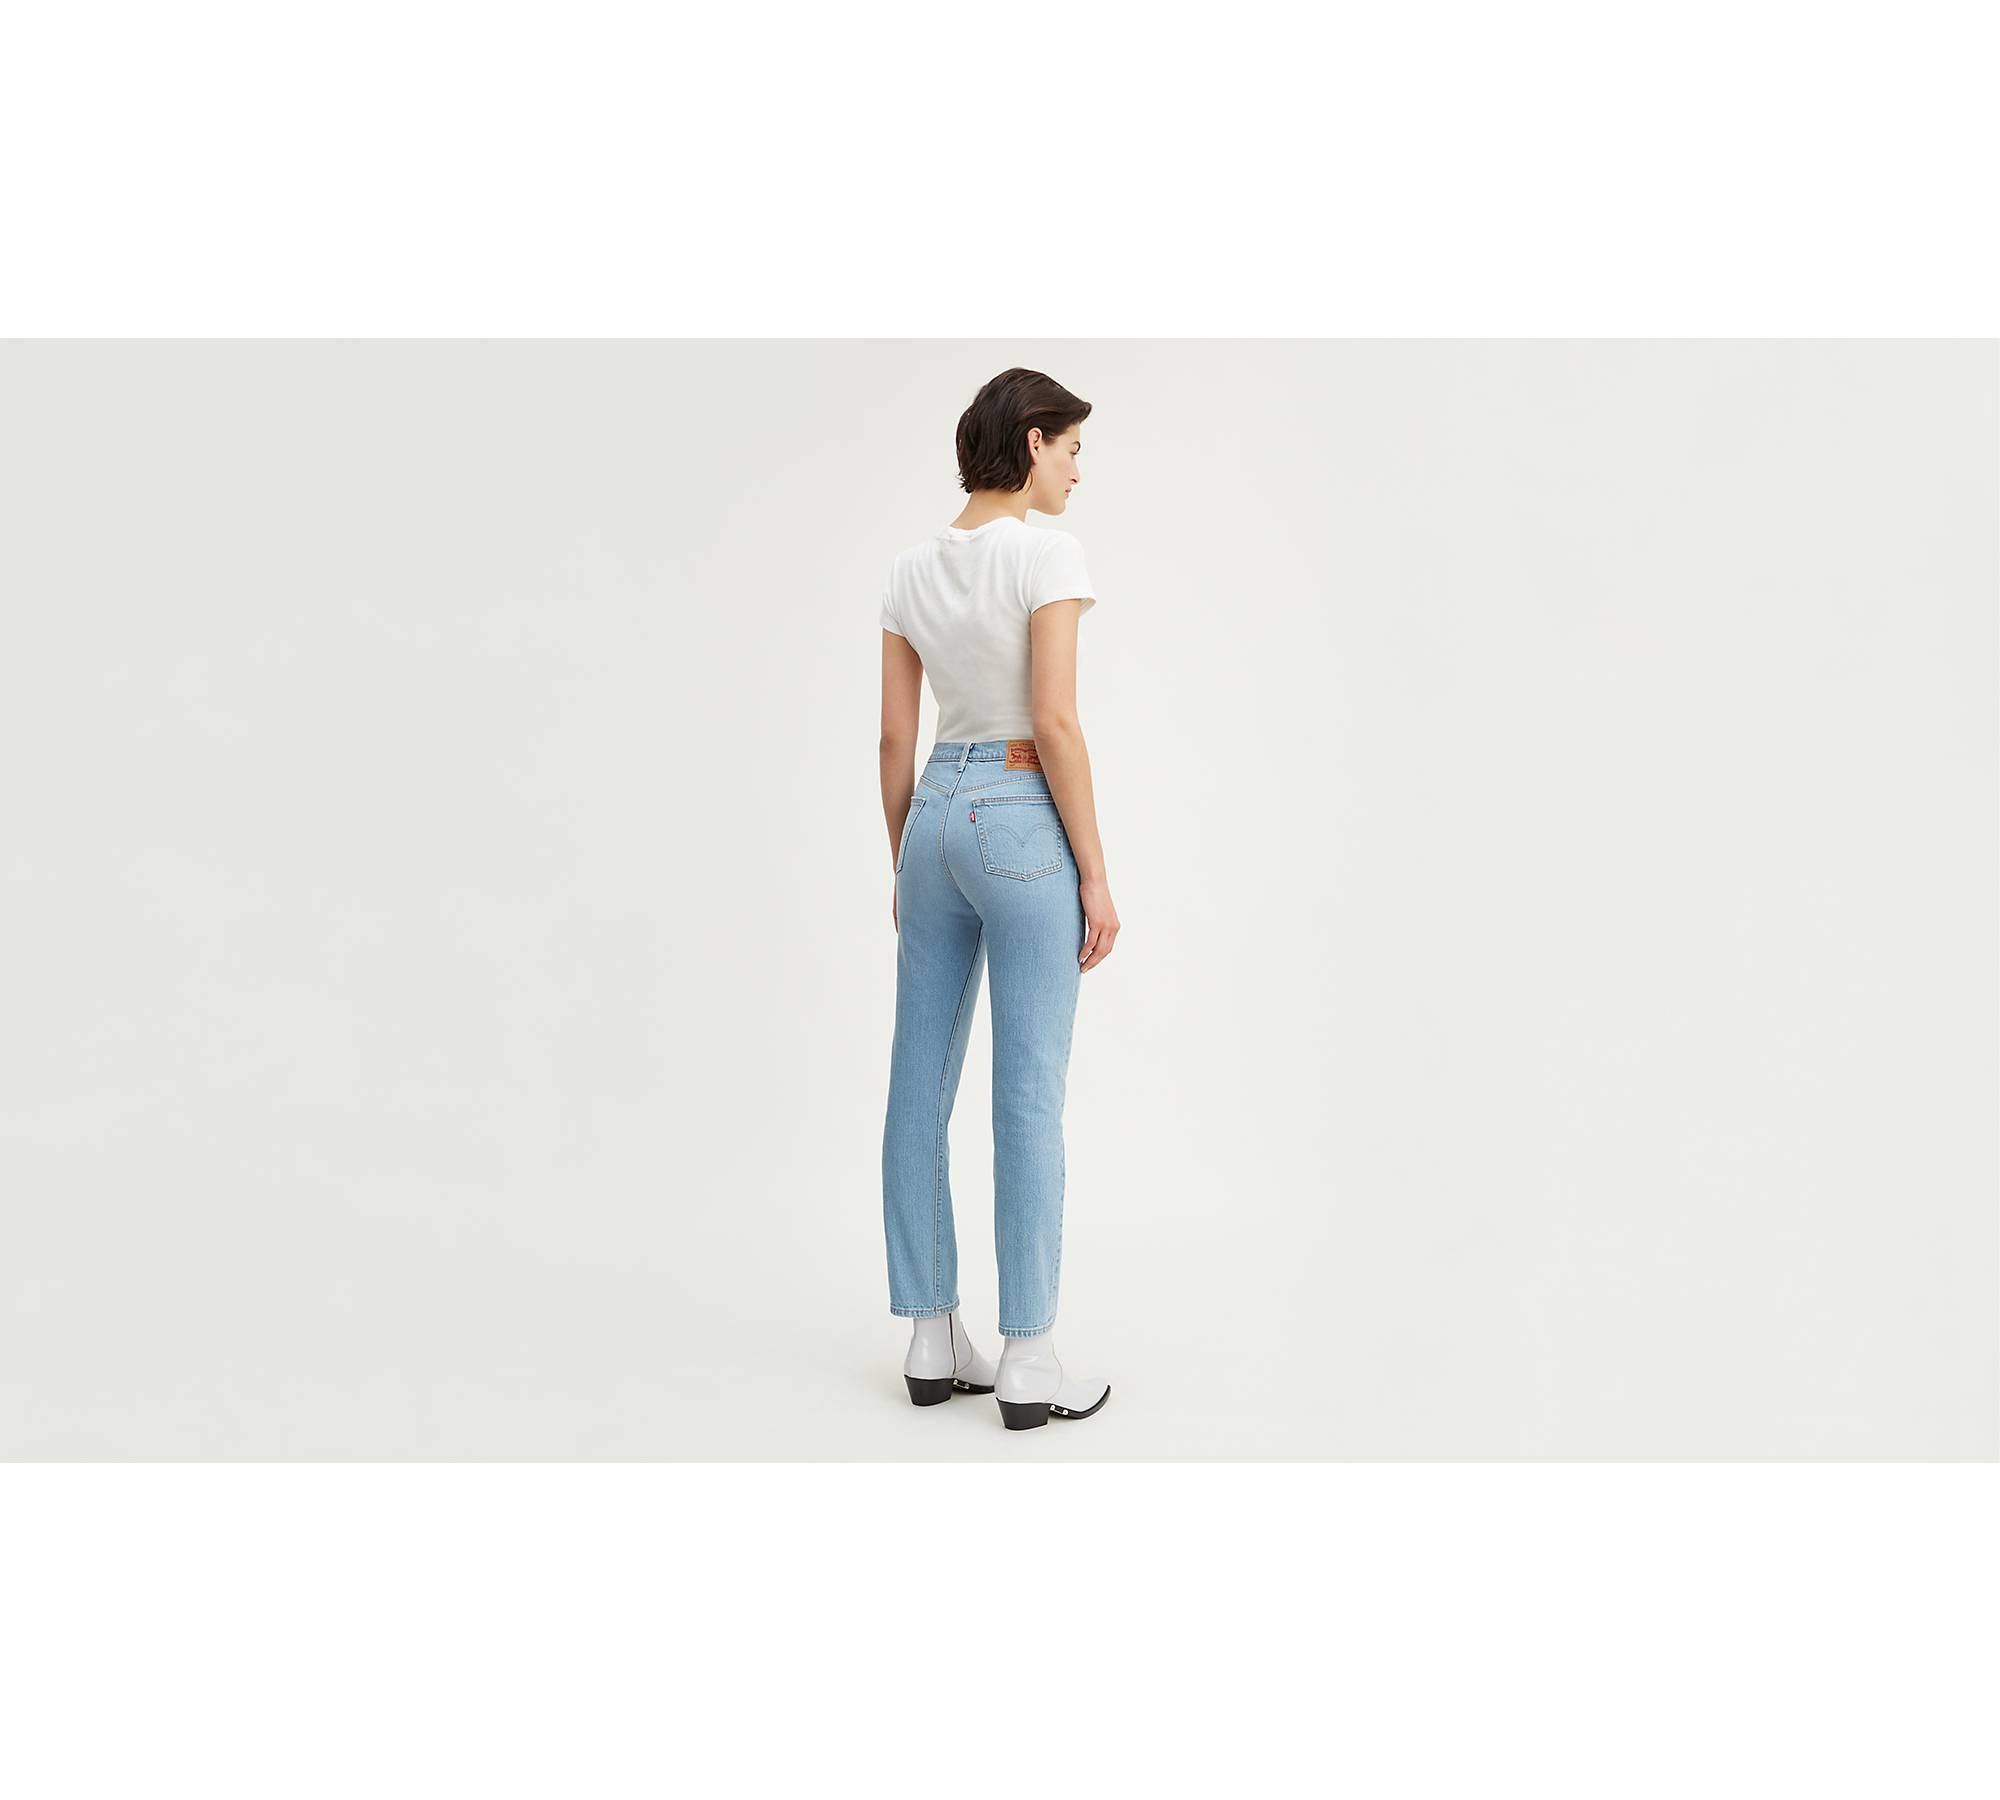 Levi's Women's Circular 501 Original Fit Jeans